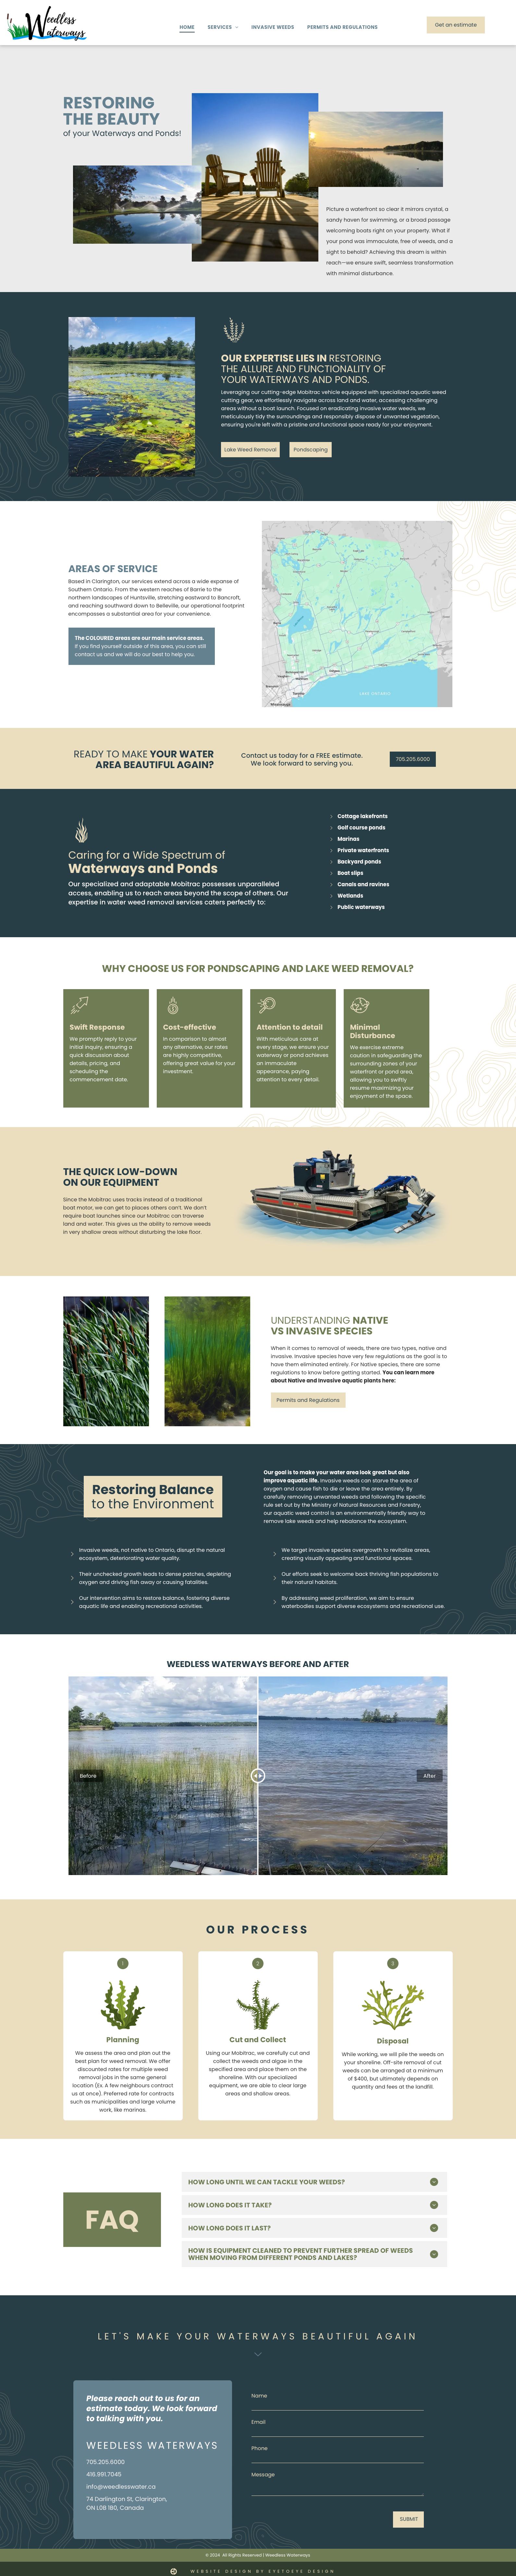 Weedless Waterways website design mockup